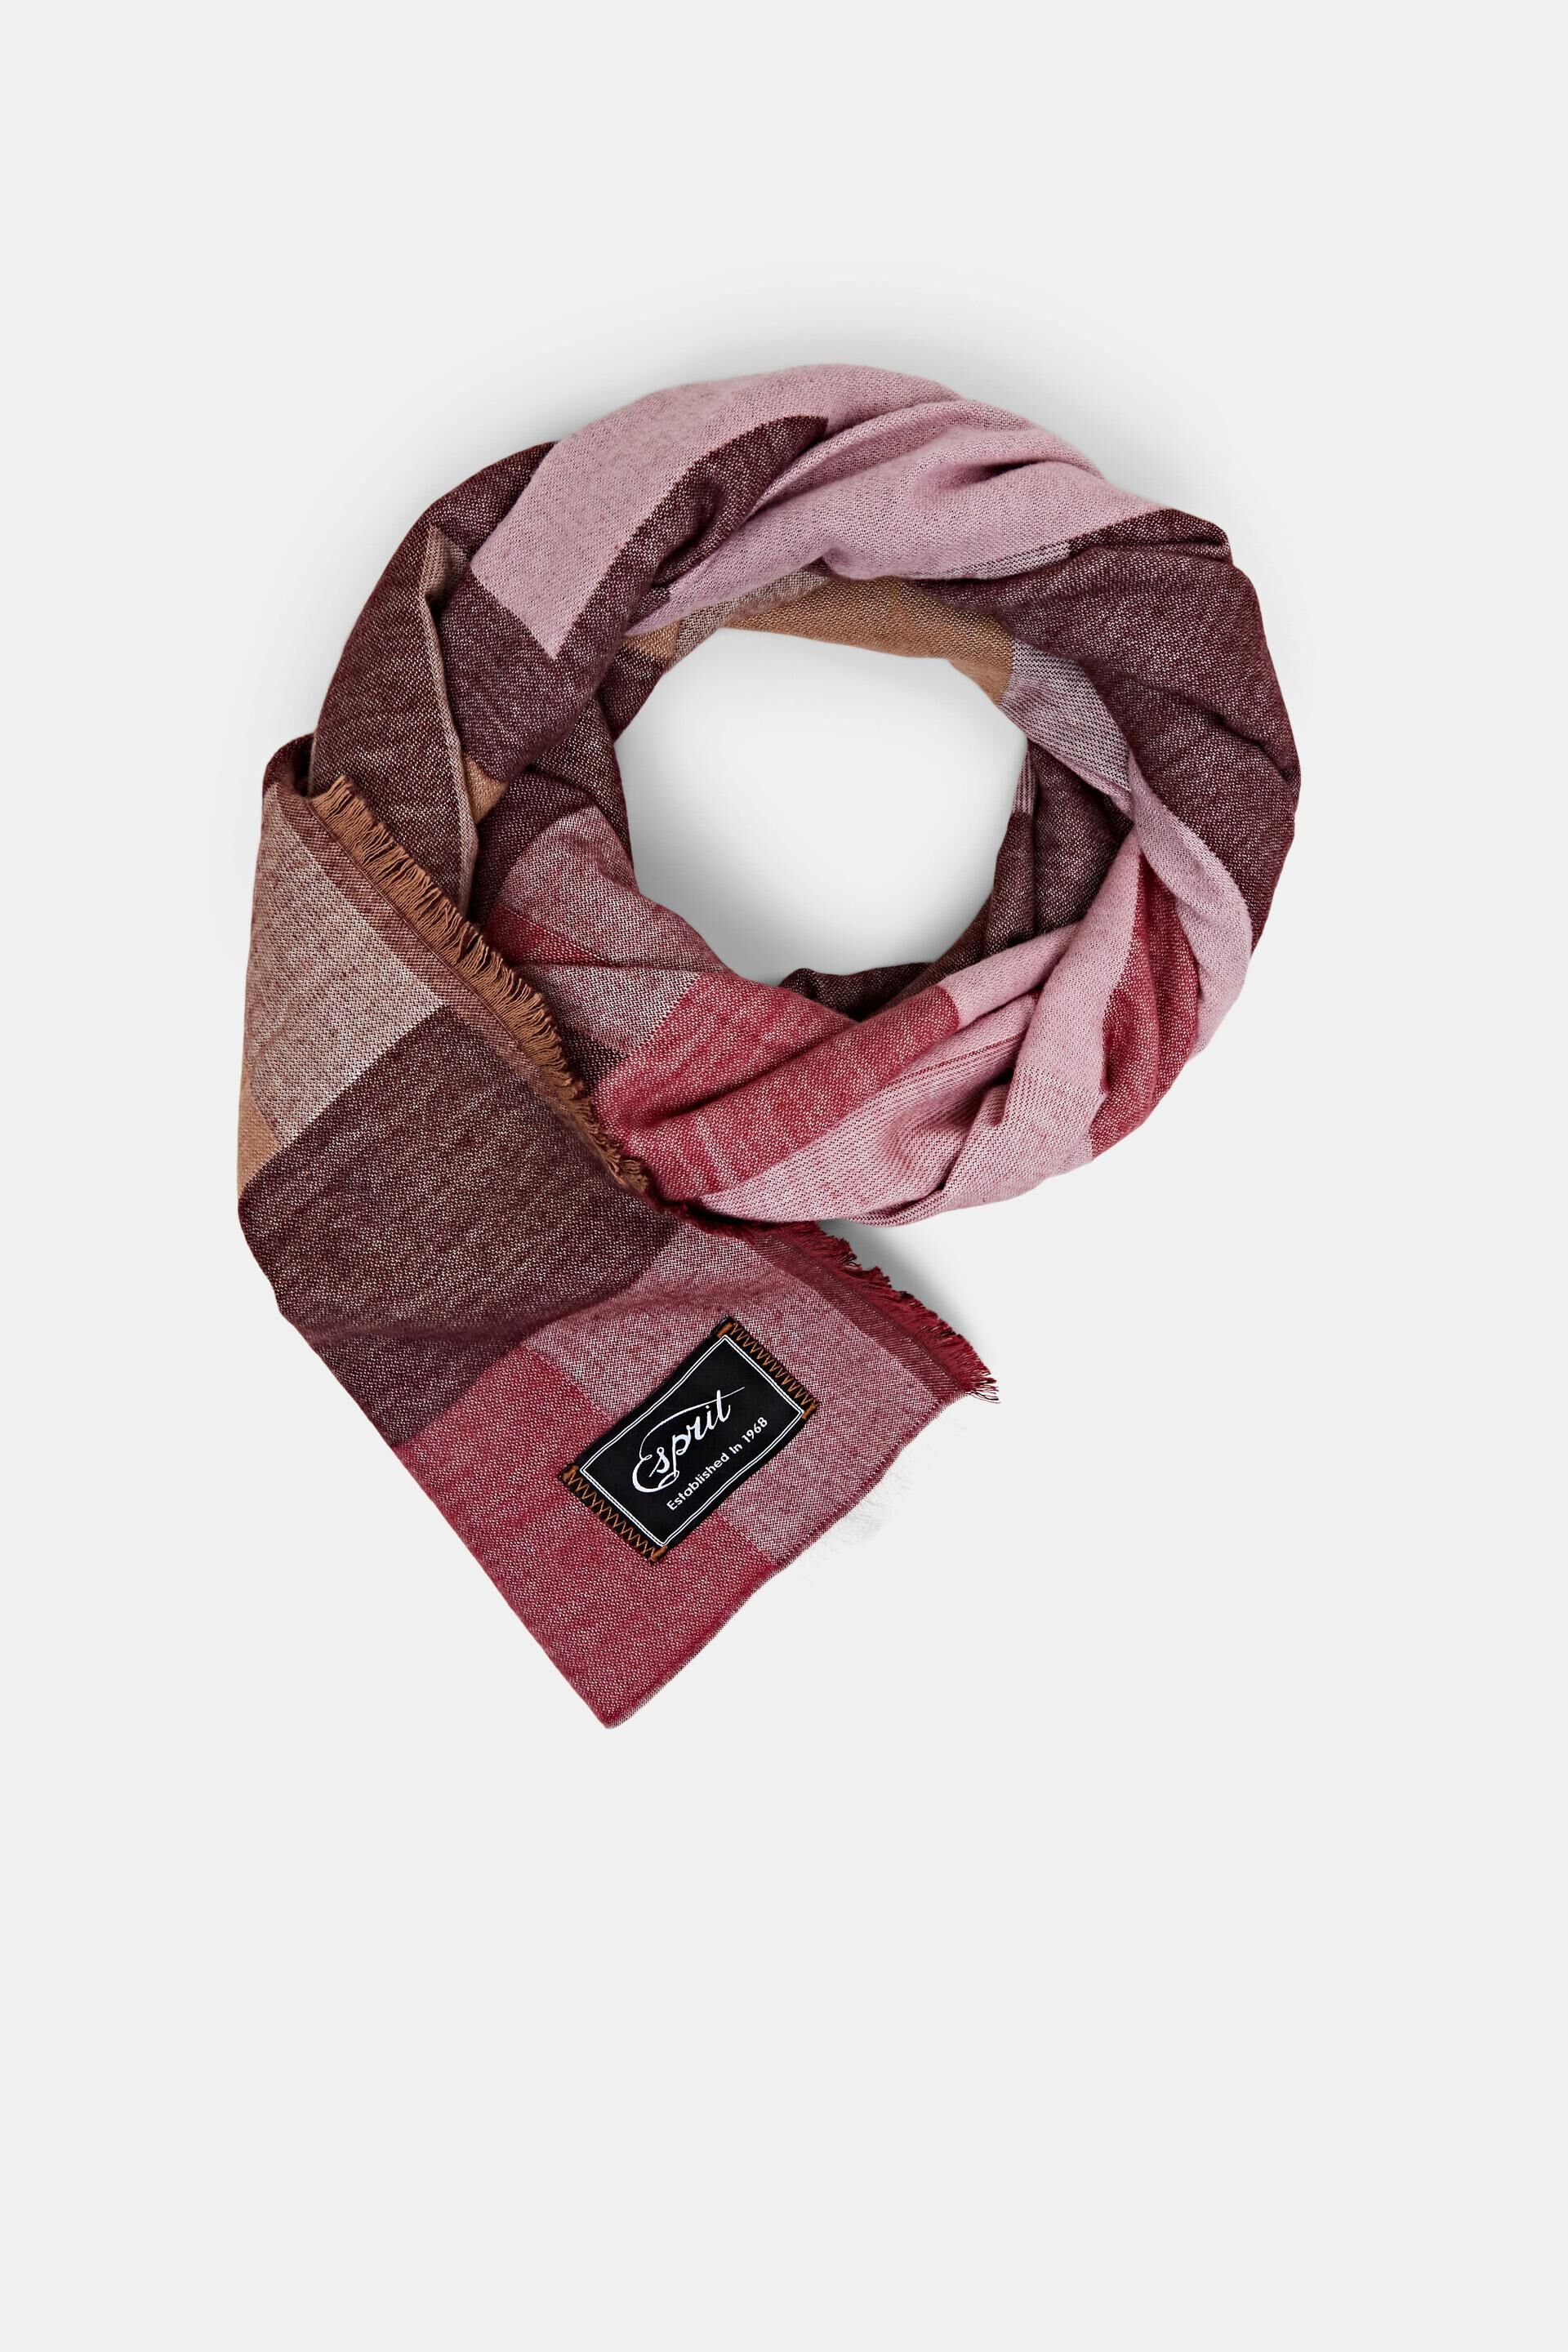 Esprit Online Store Multi-coloured scarf, LENZING™ ECOVERO&trade